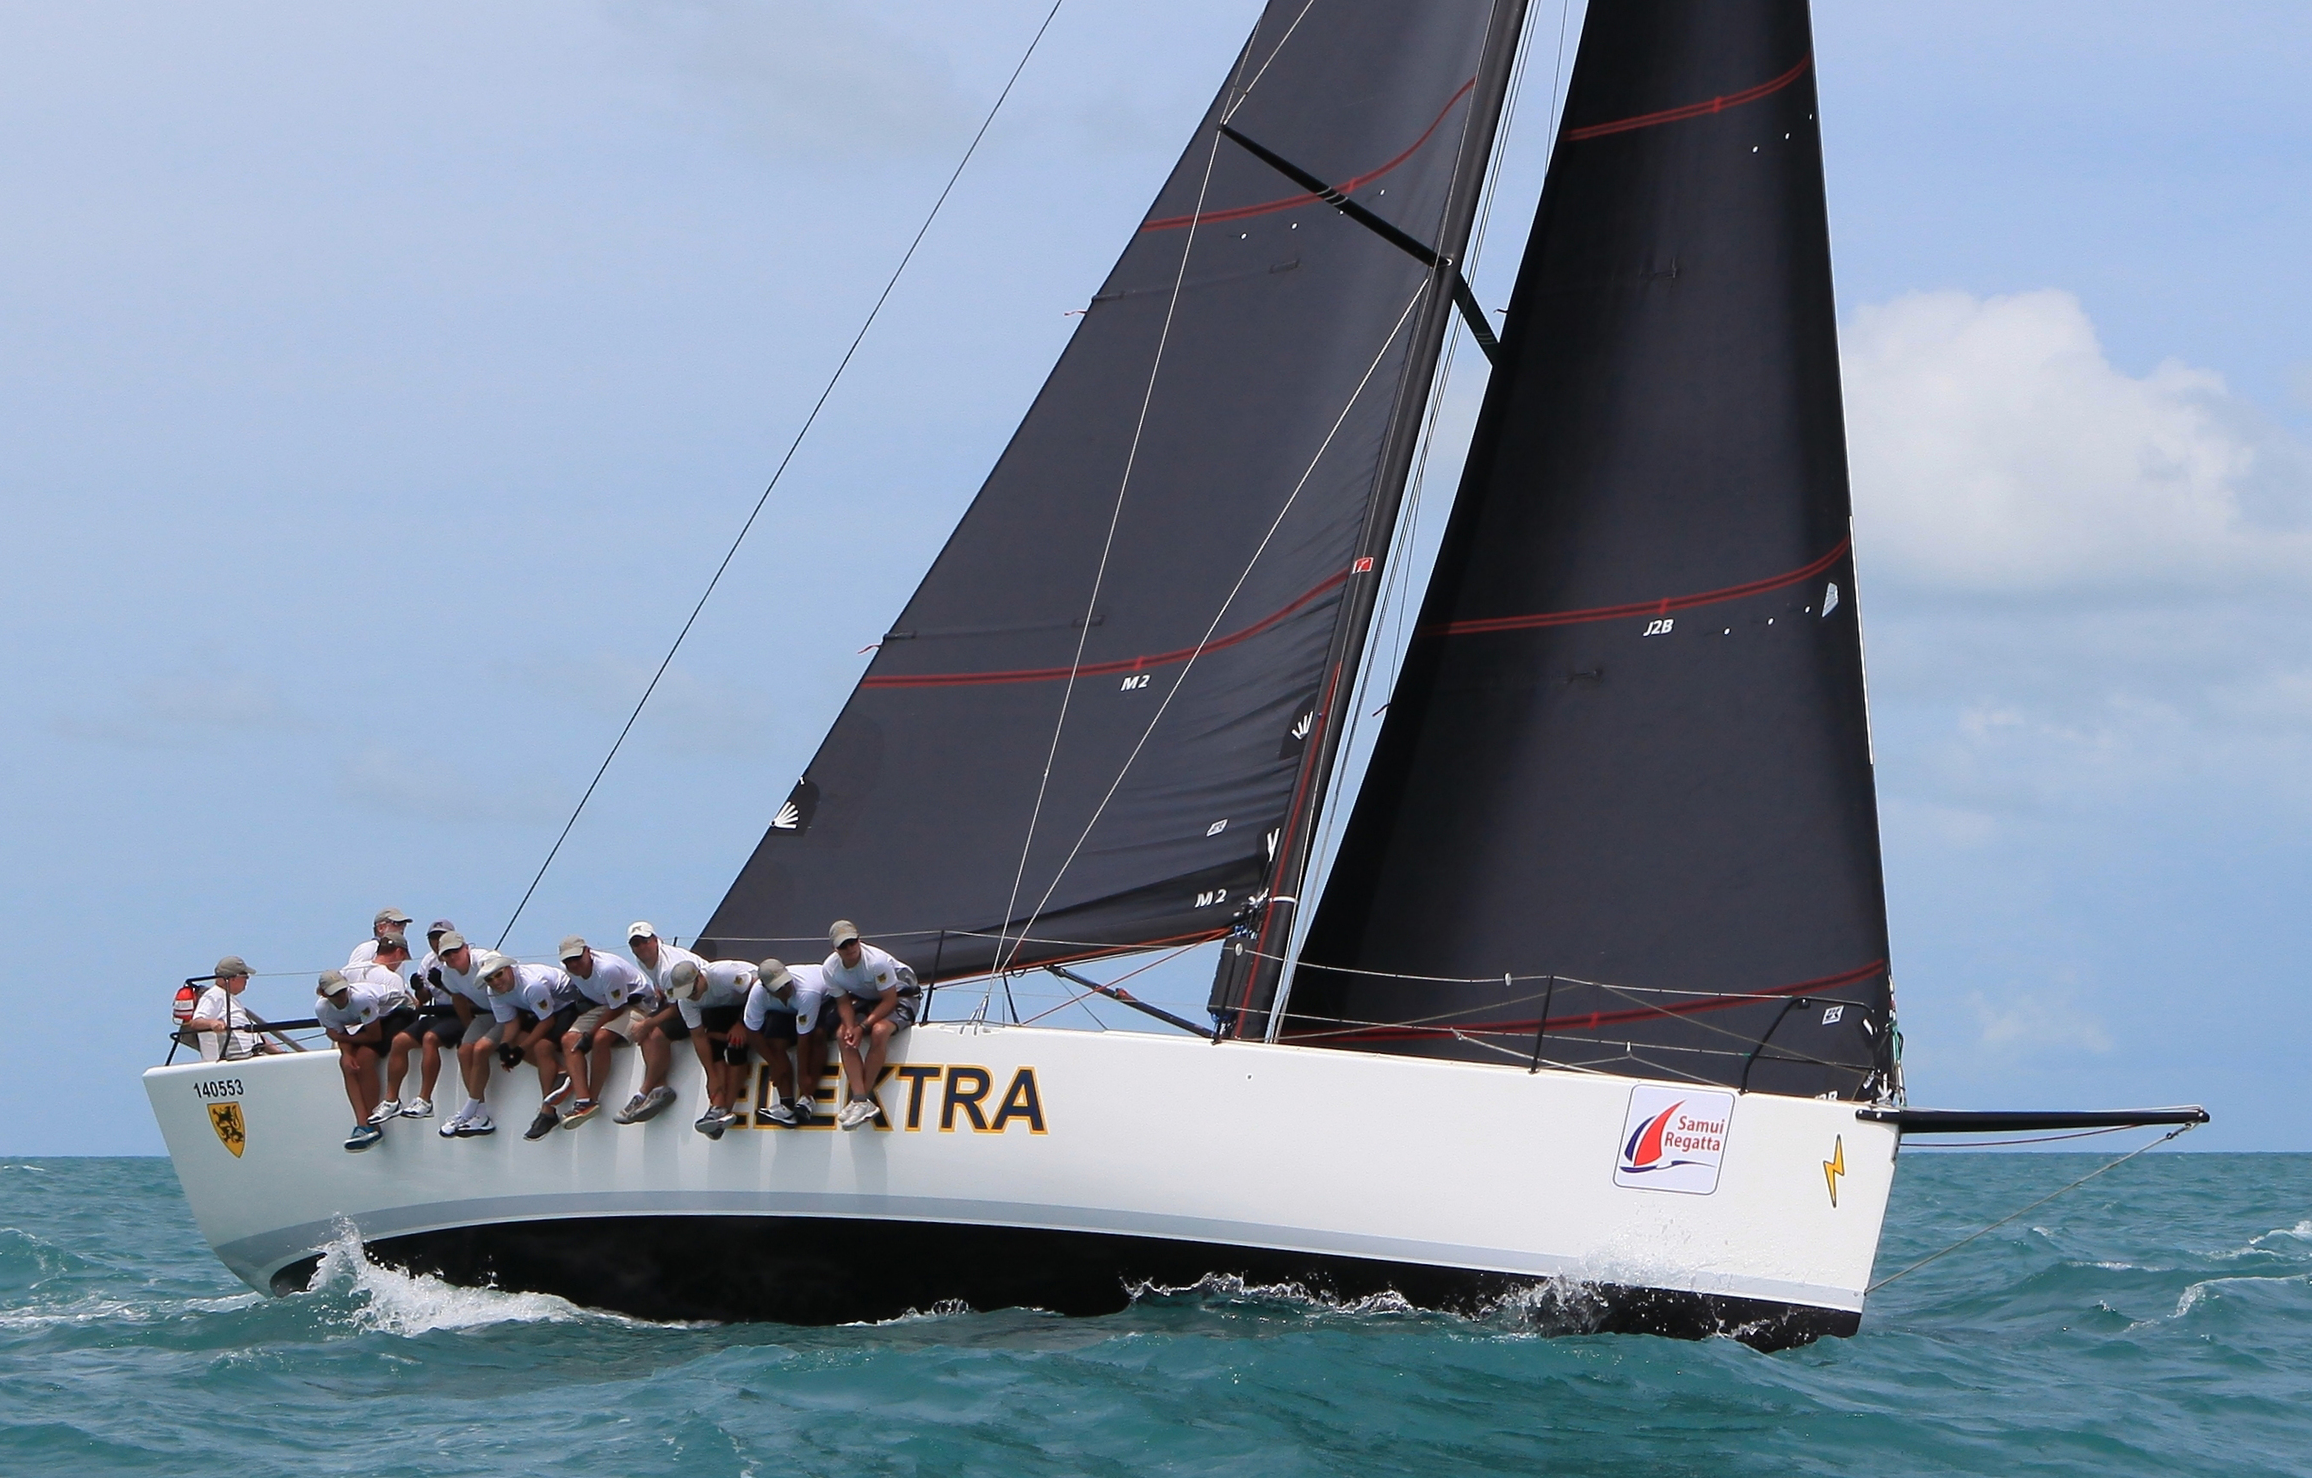 The Sydney 43 ELEKTRA sailing upwind with Titanium Lite Skin® main and jib.